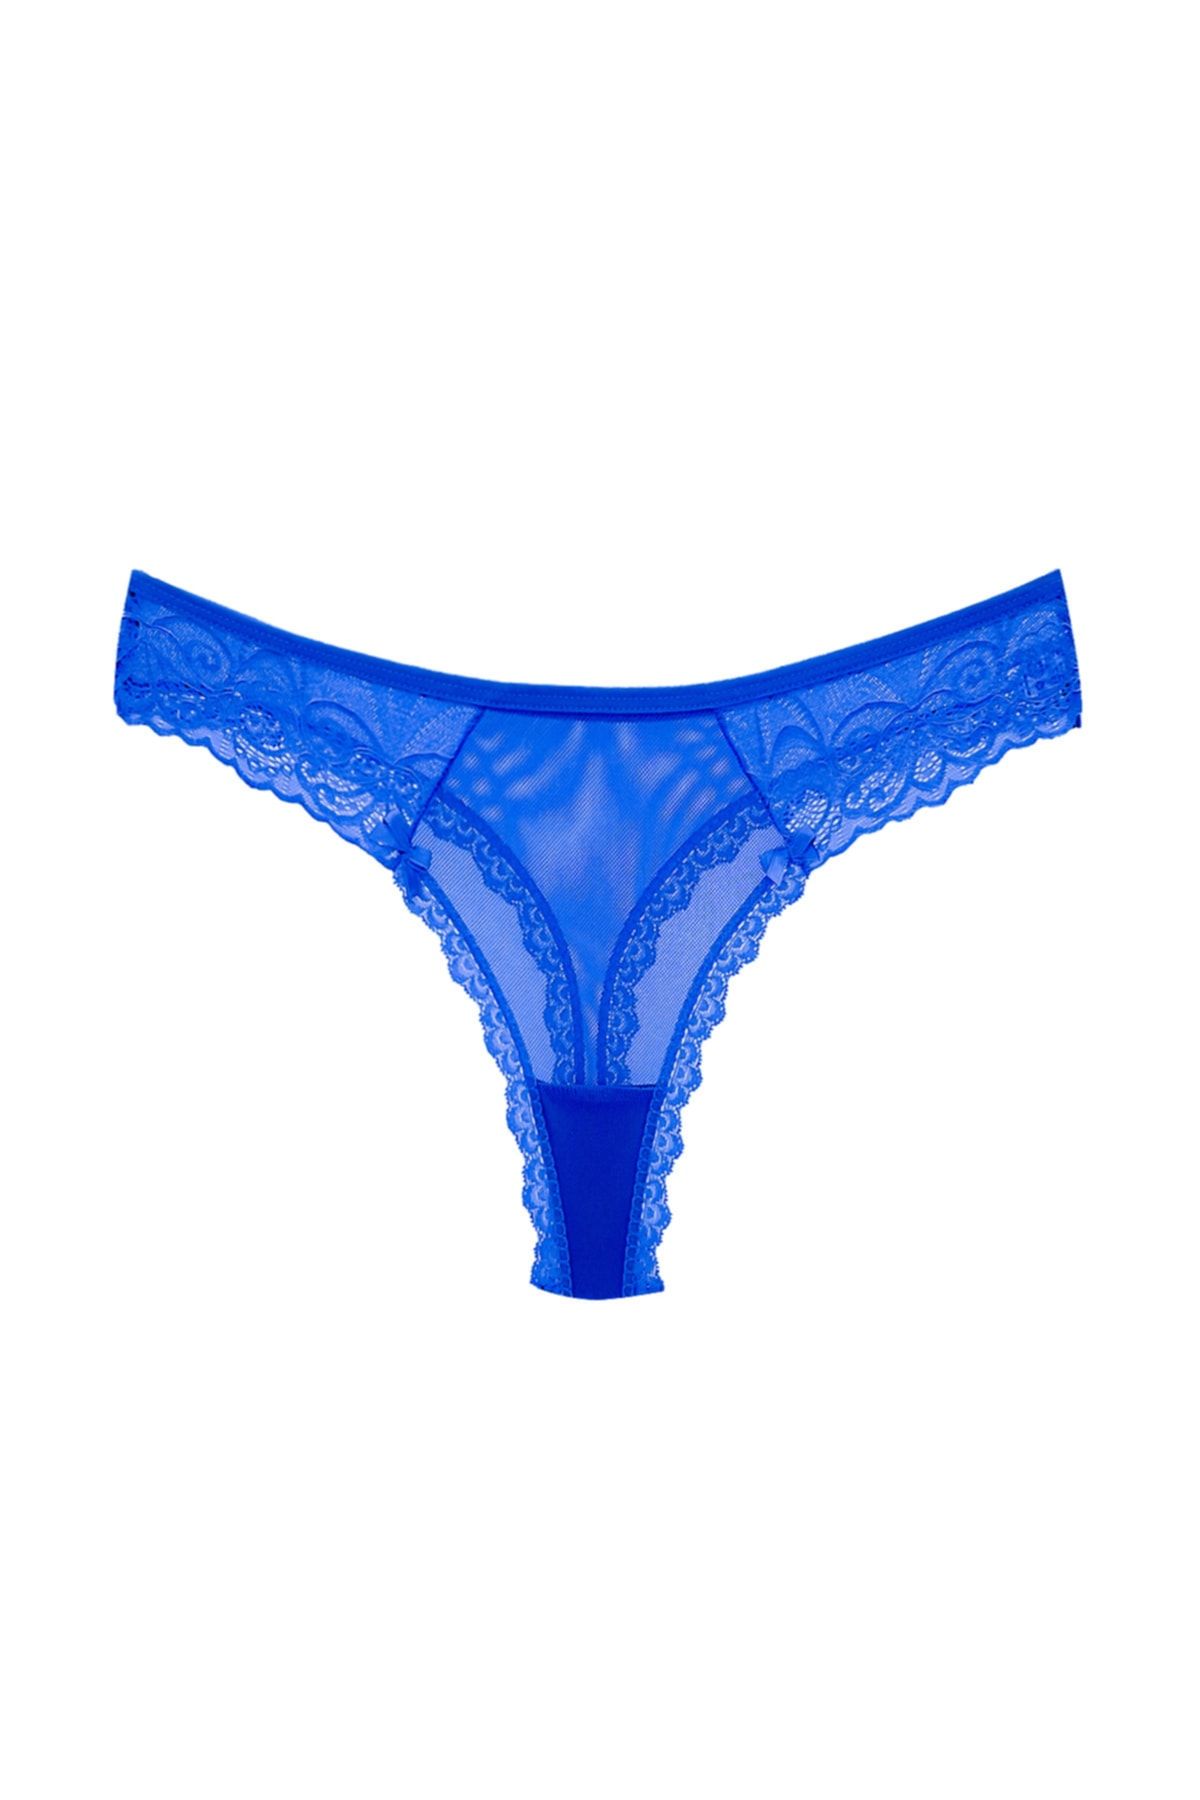 HNX Saks Front Back Tulle Lace Detailed Thong Women's Panties